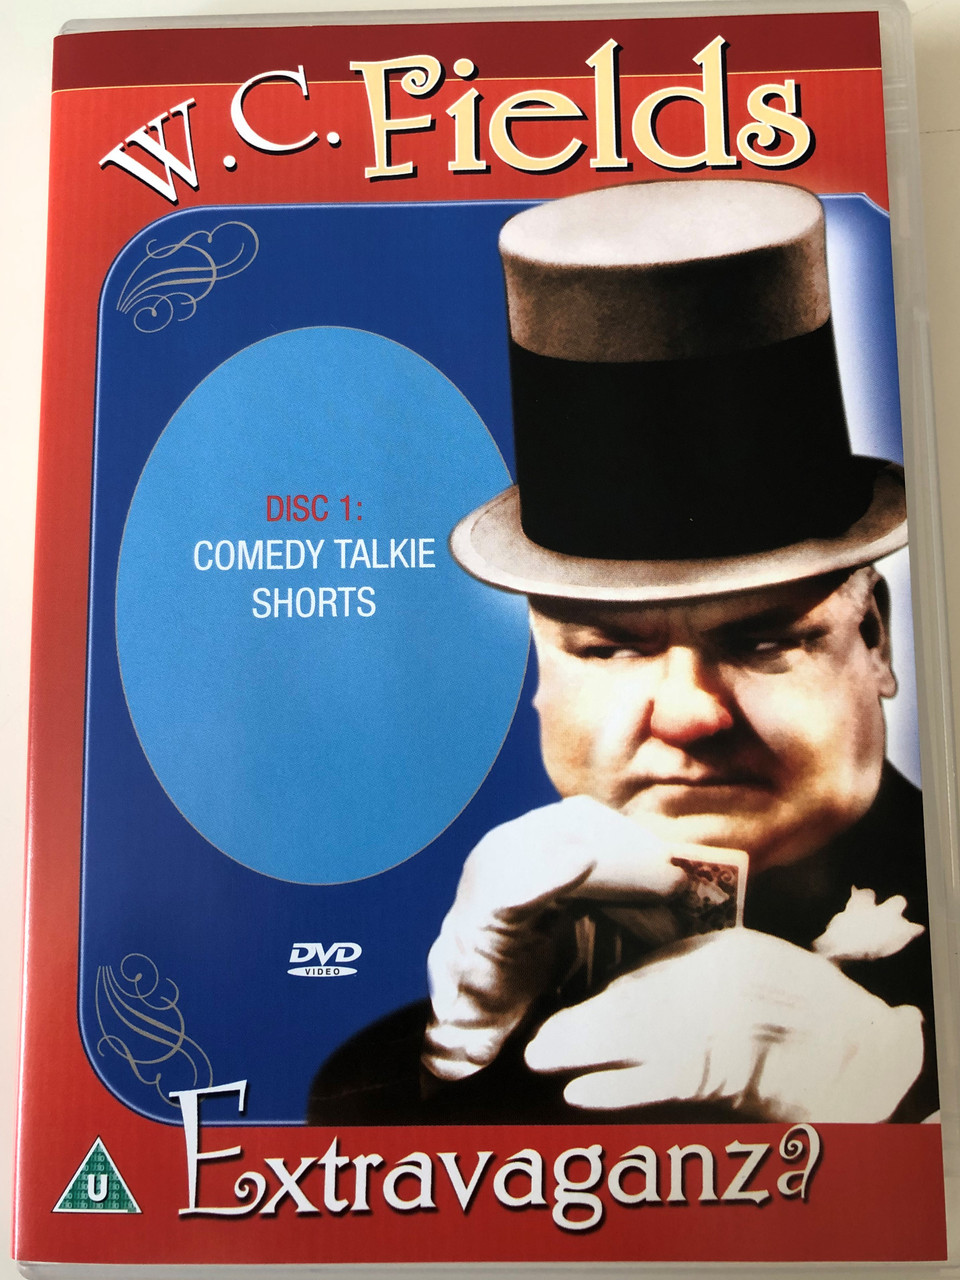 W.C. Fields Extravaganza DVD Disc 1. Comedy Talkie Shorts / Passport  International Productions / DVD 3331 - bibleinmylanguage